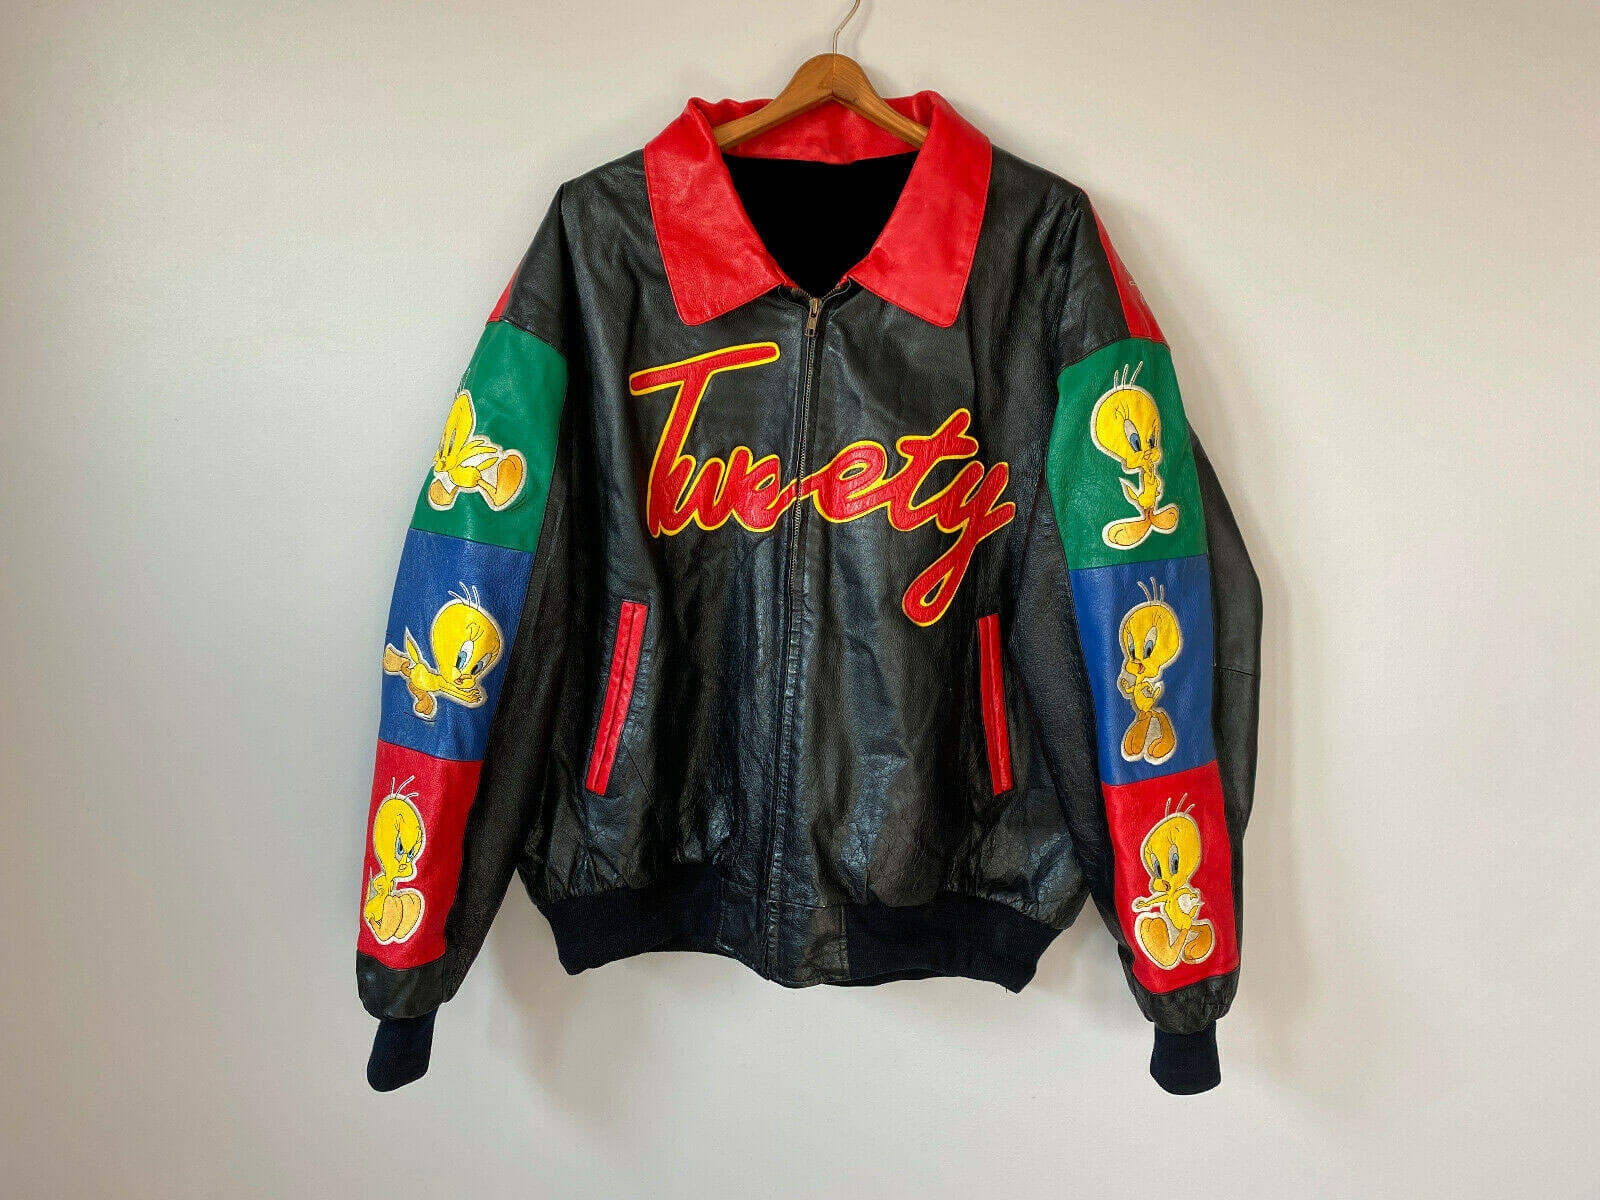 Vintage 90s Tweety Bird Looney Tunes Leather Jacket - Maker of Jacket